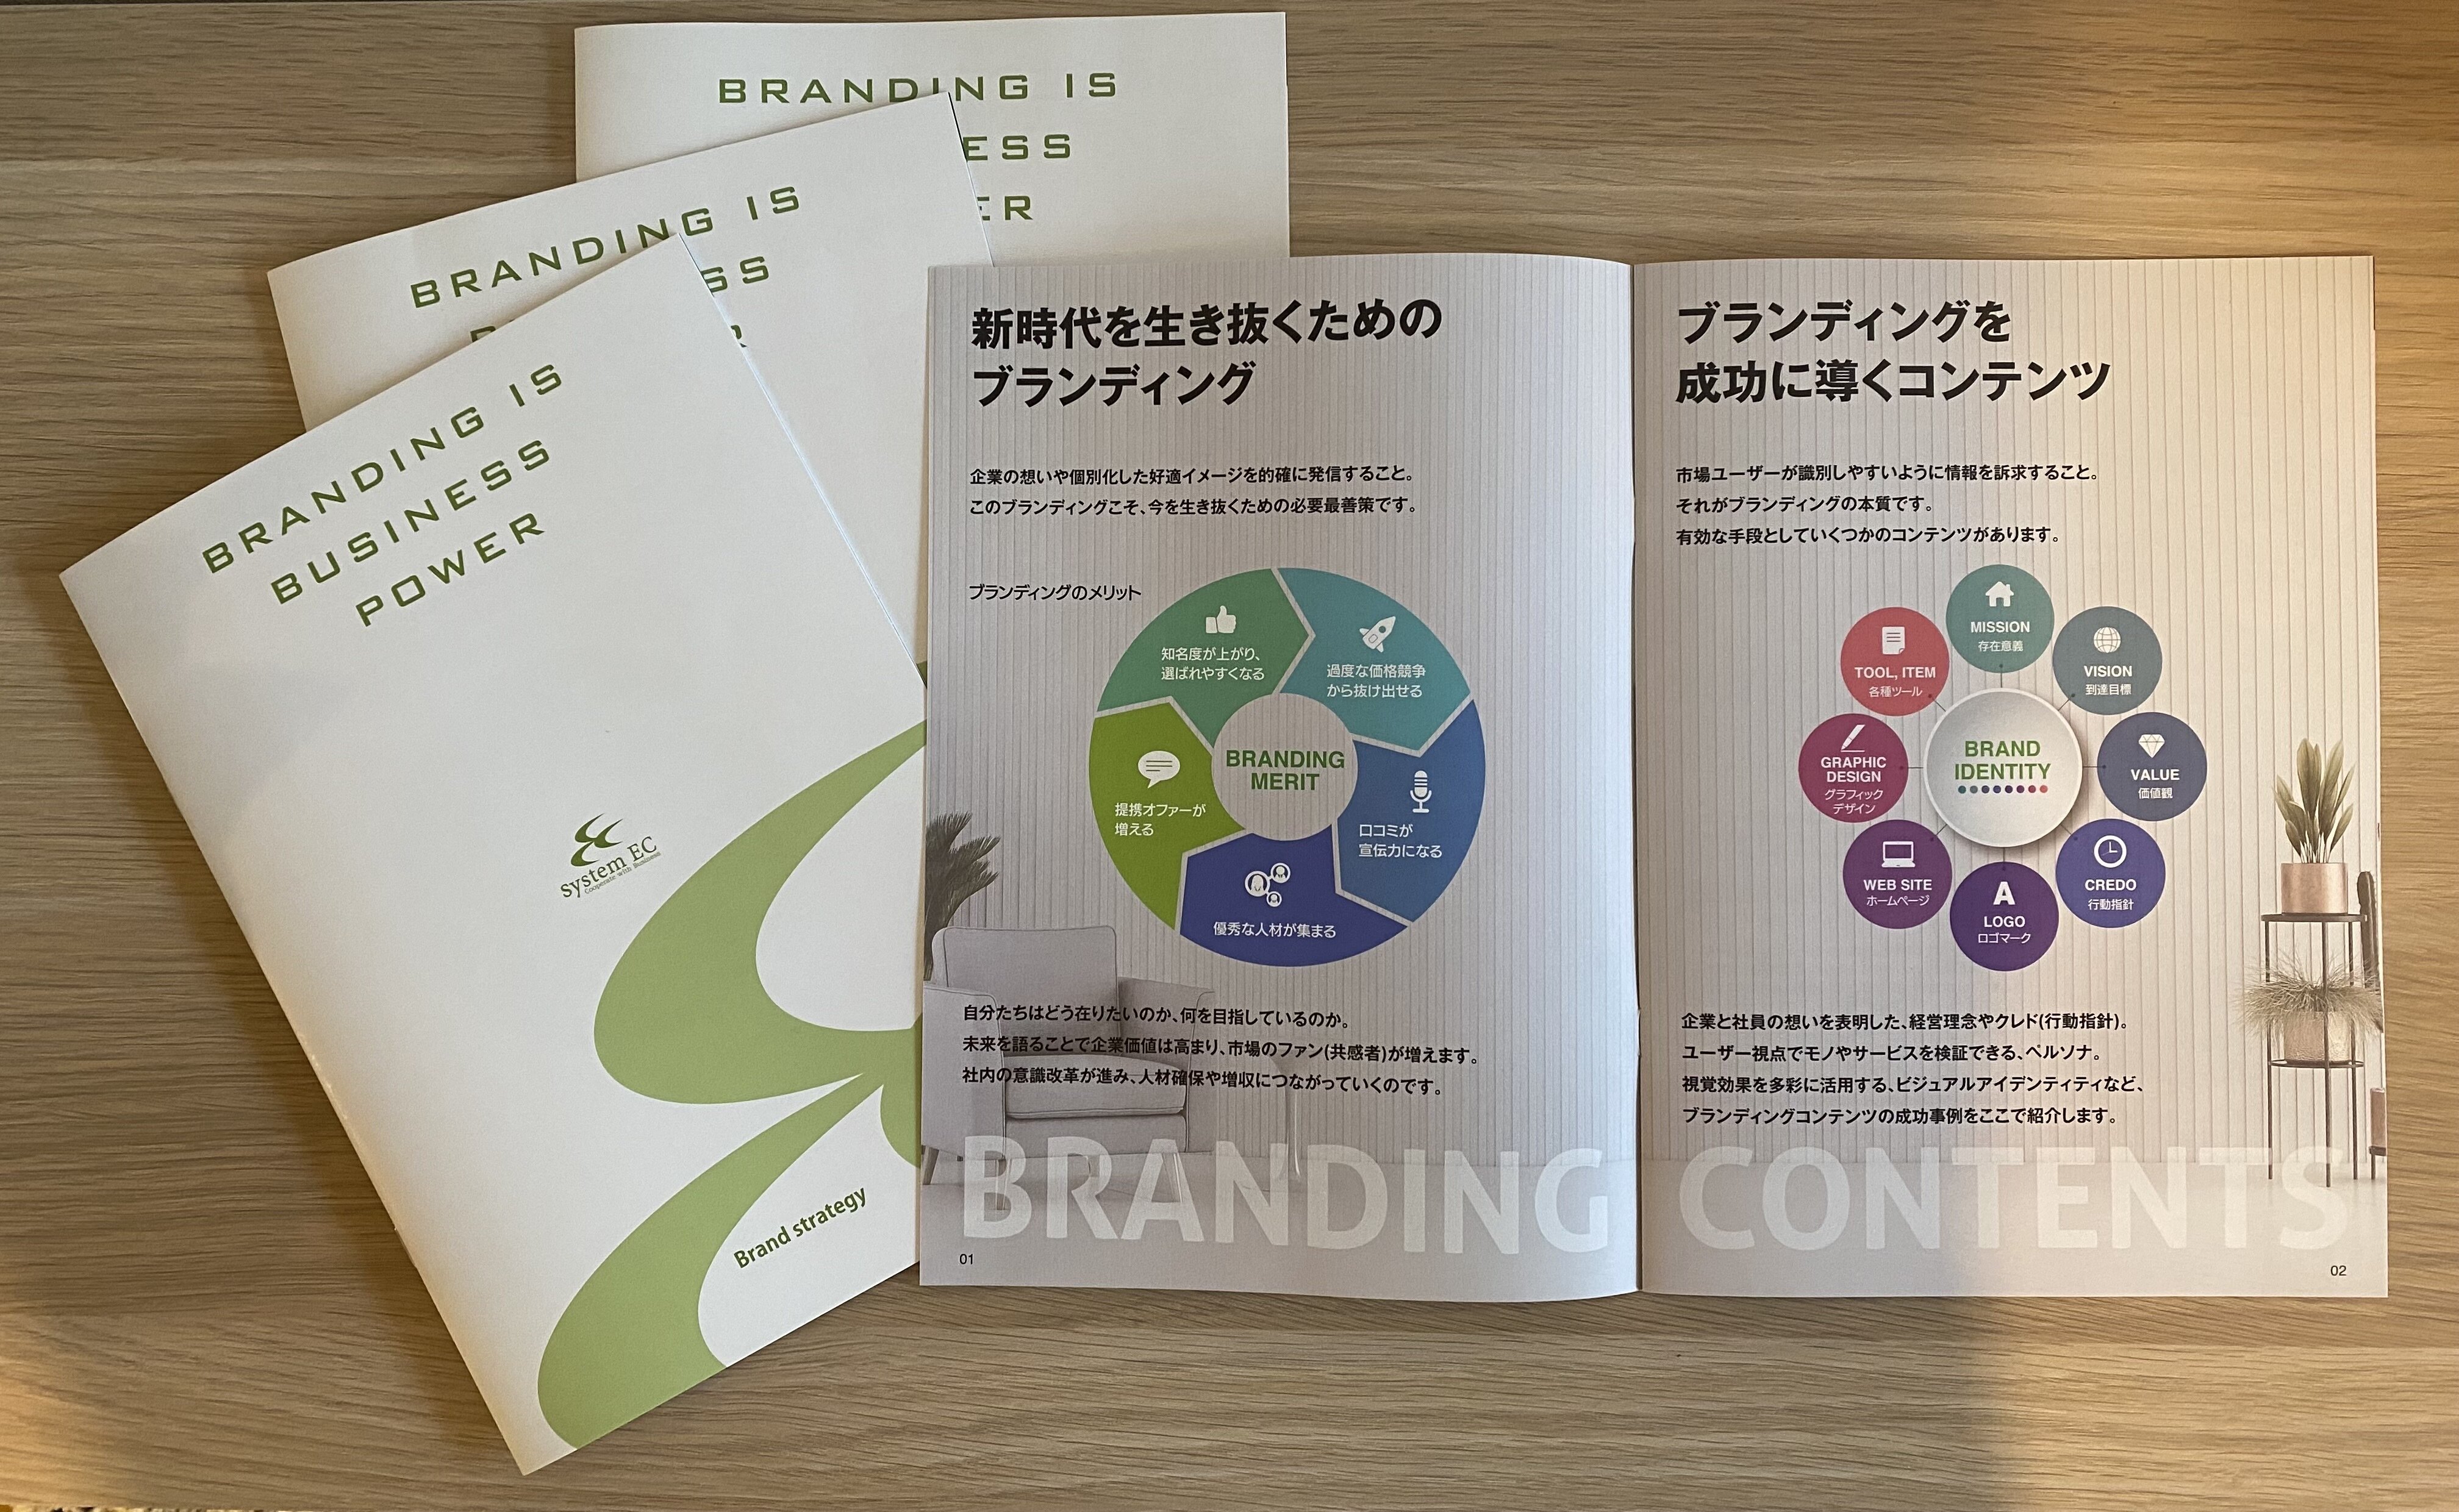 Branding_strategy.jpg